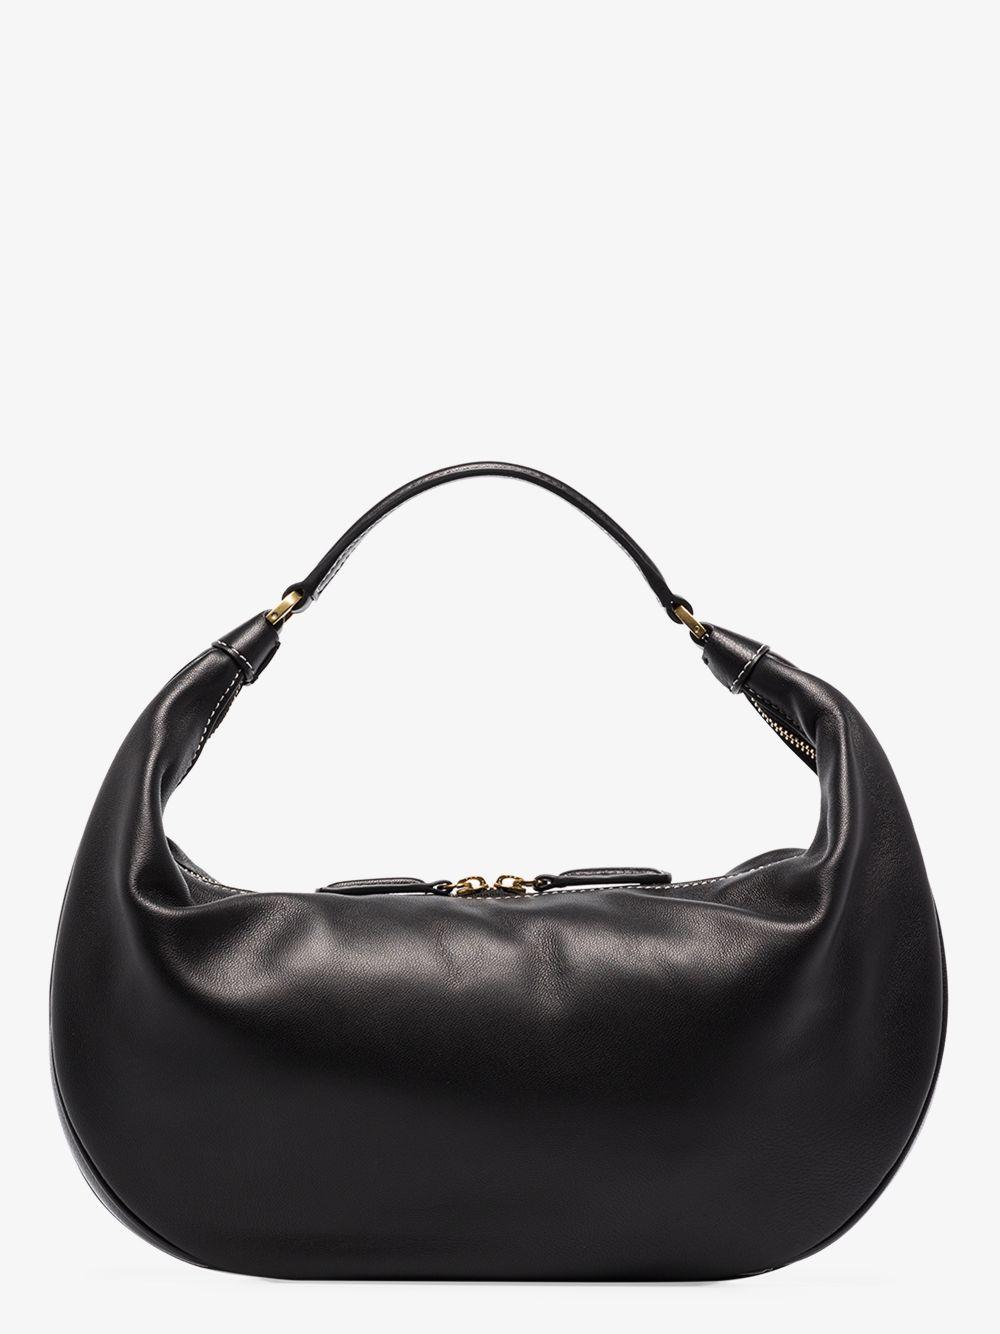 STAUD Sasha Slouchy Leather Shoulder Bag in Black